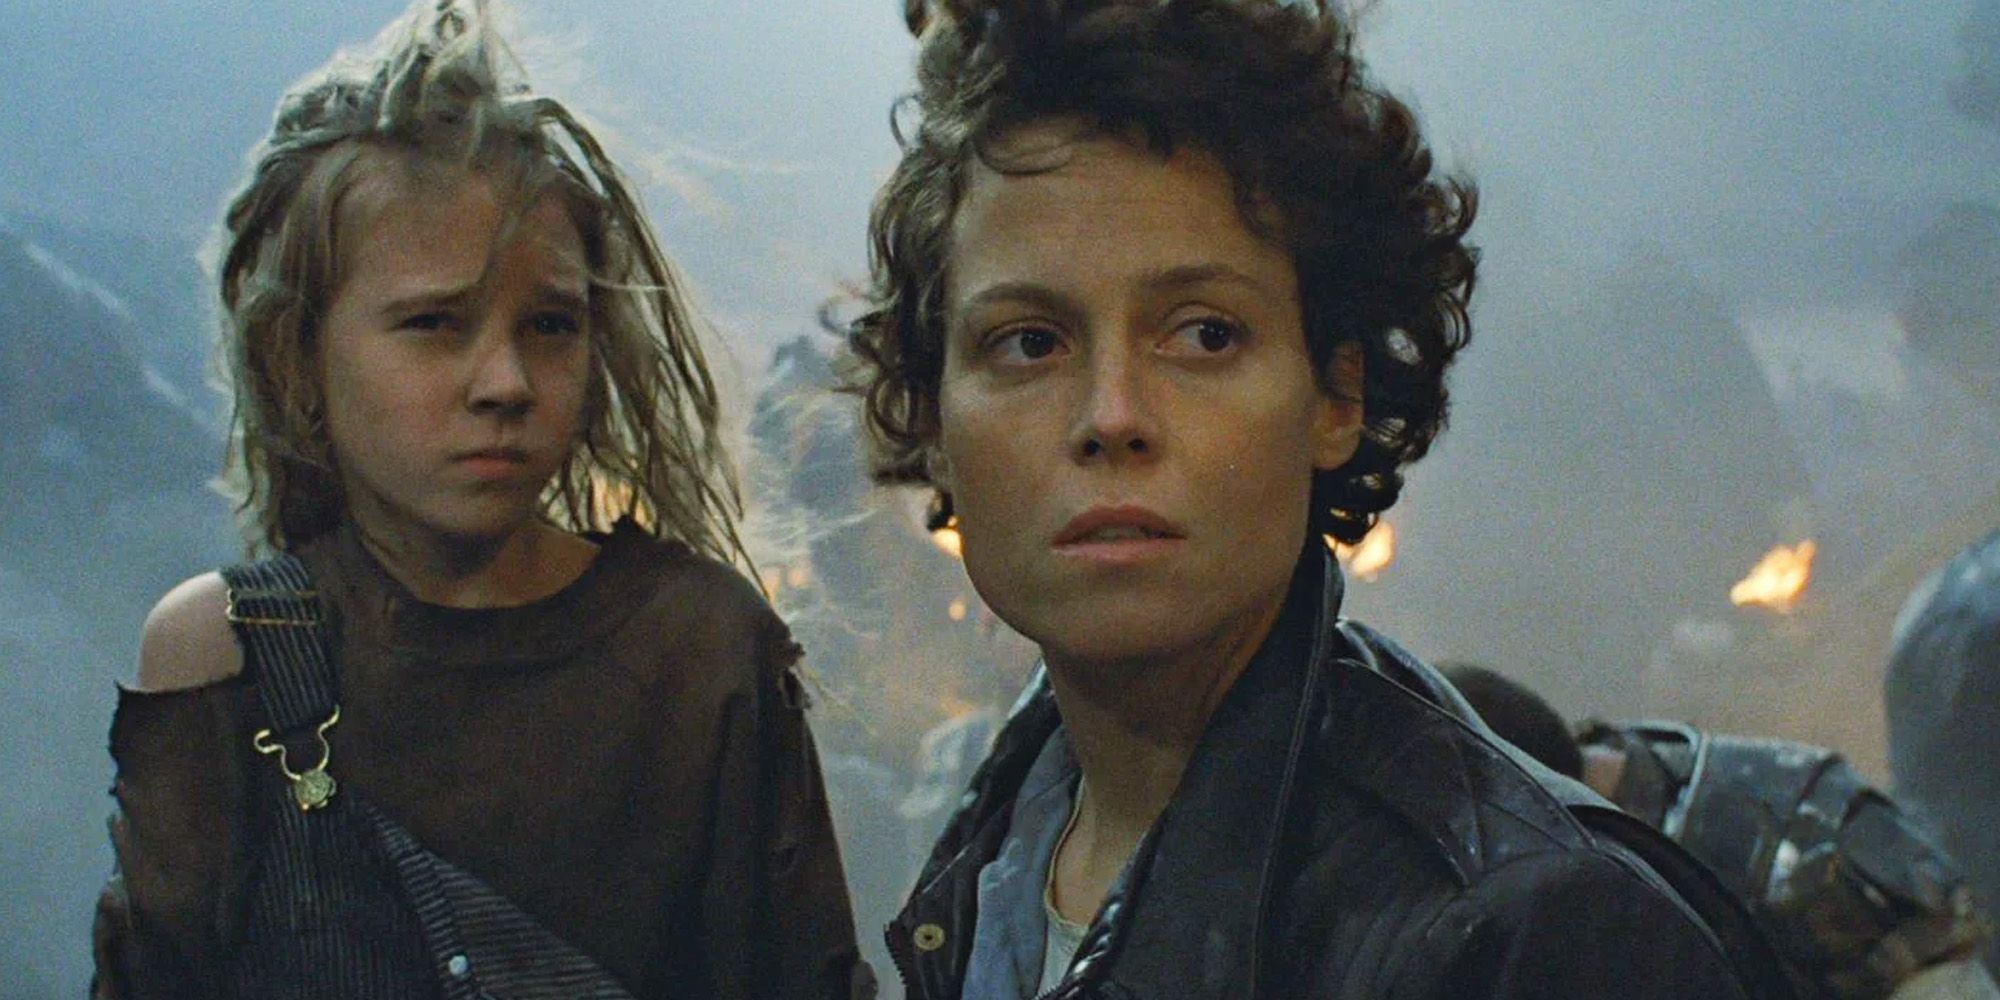 Sigourney Weaver as Ellen Ripley and Carrie Henn as Newt in Aliens